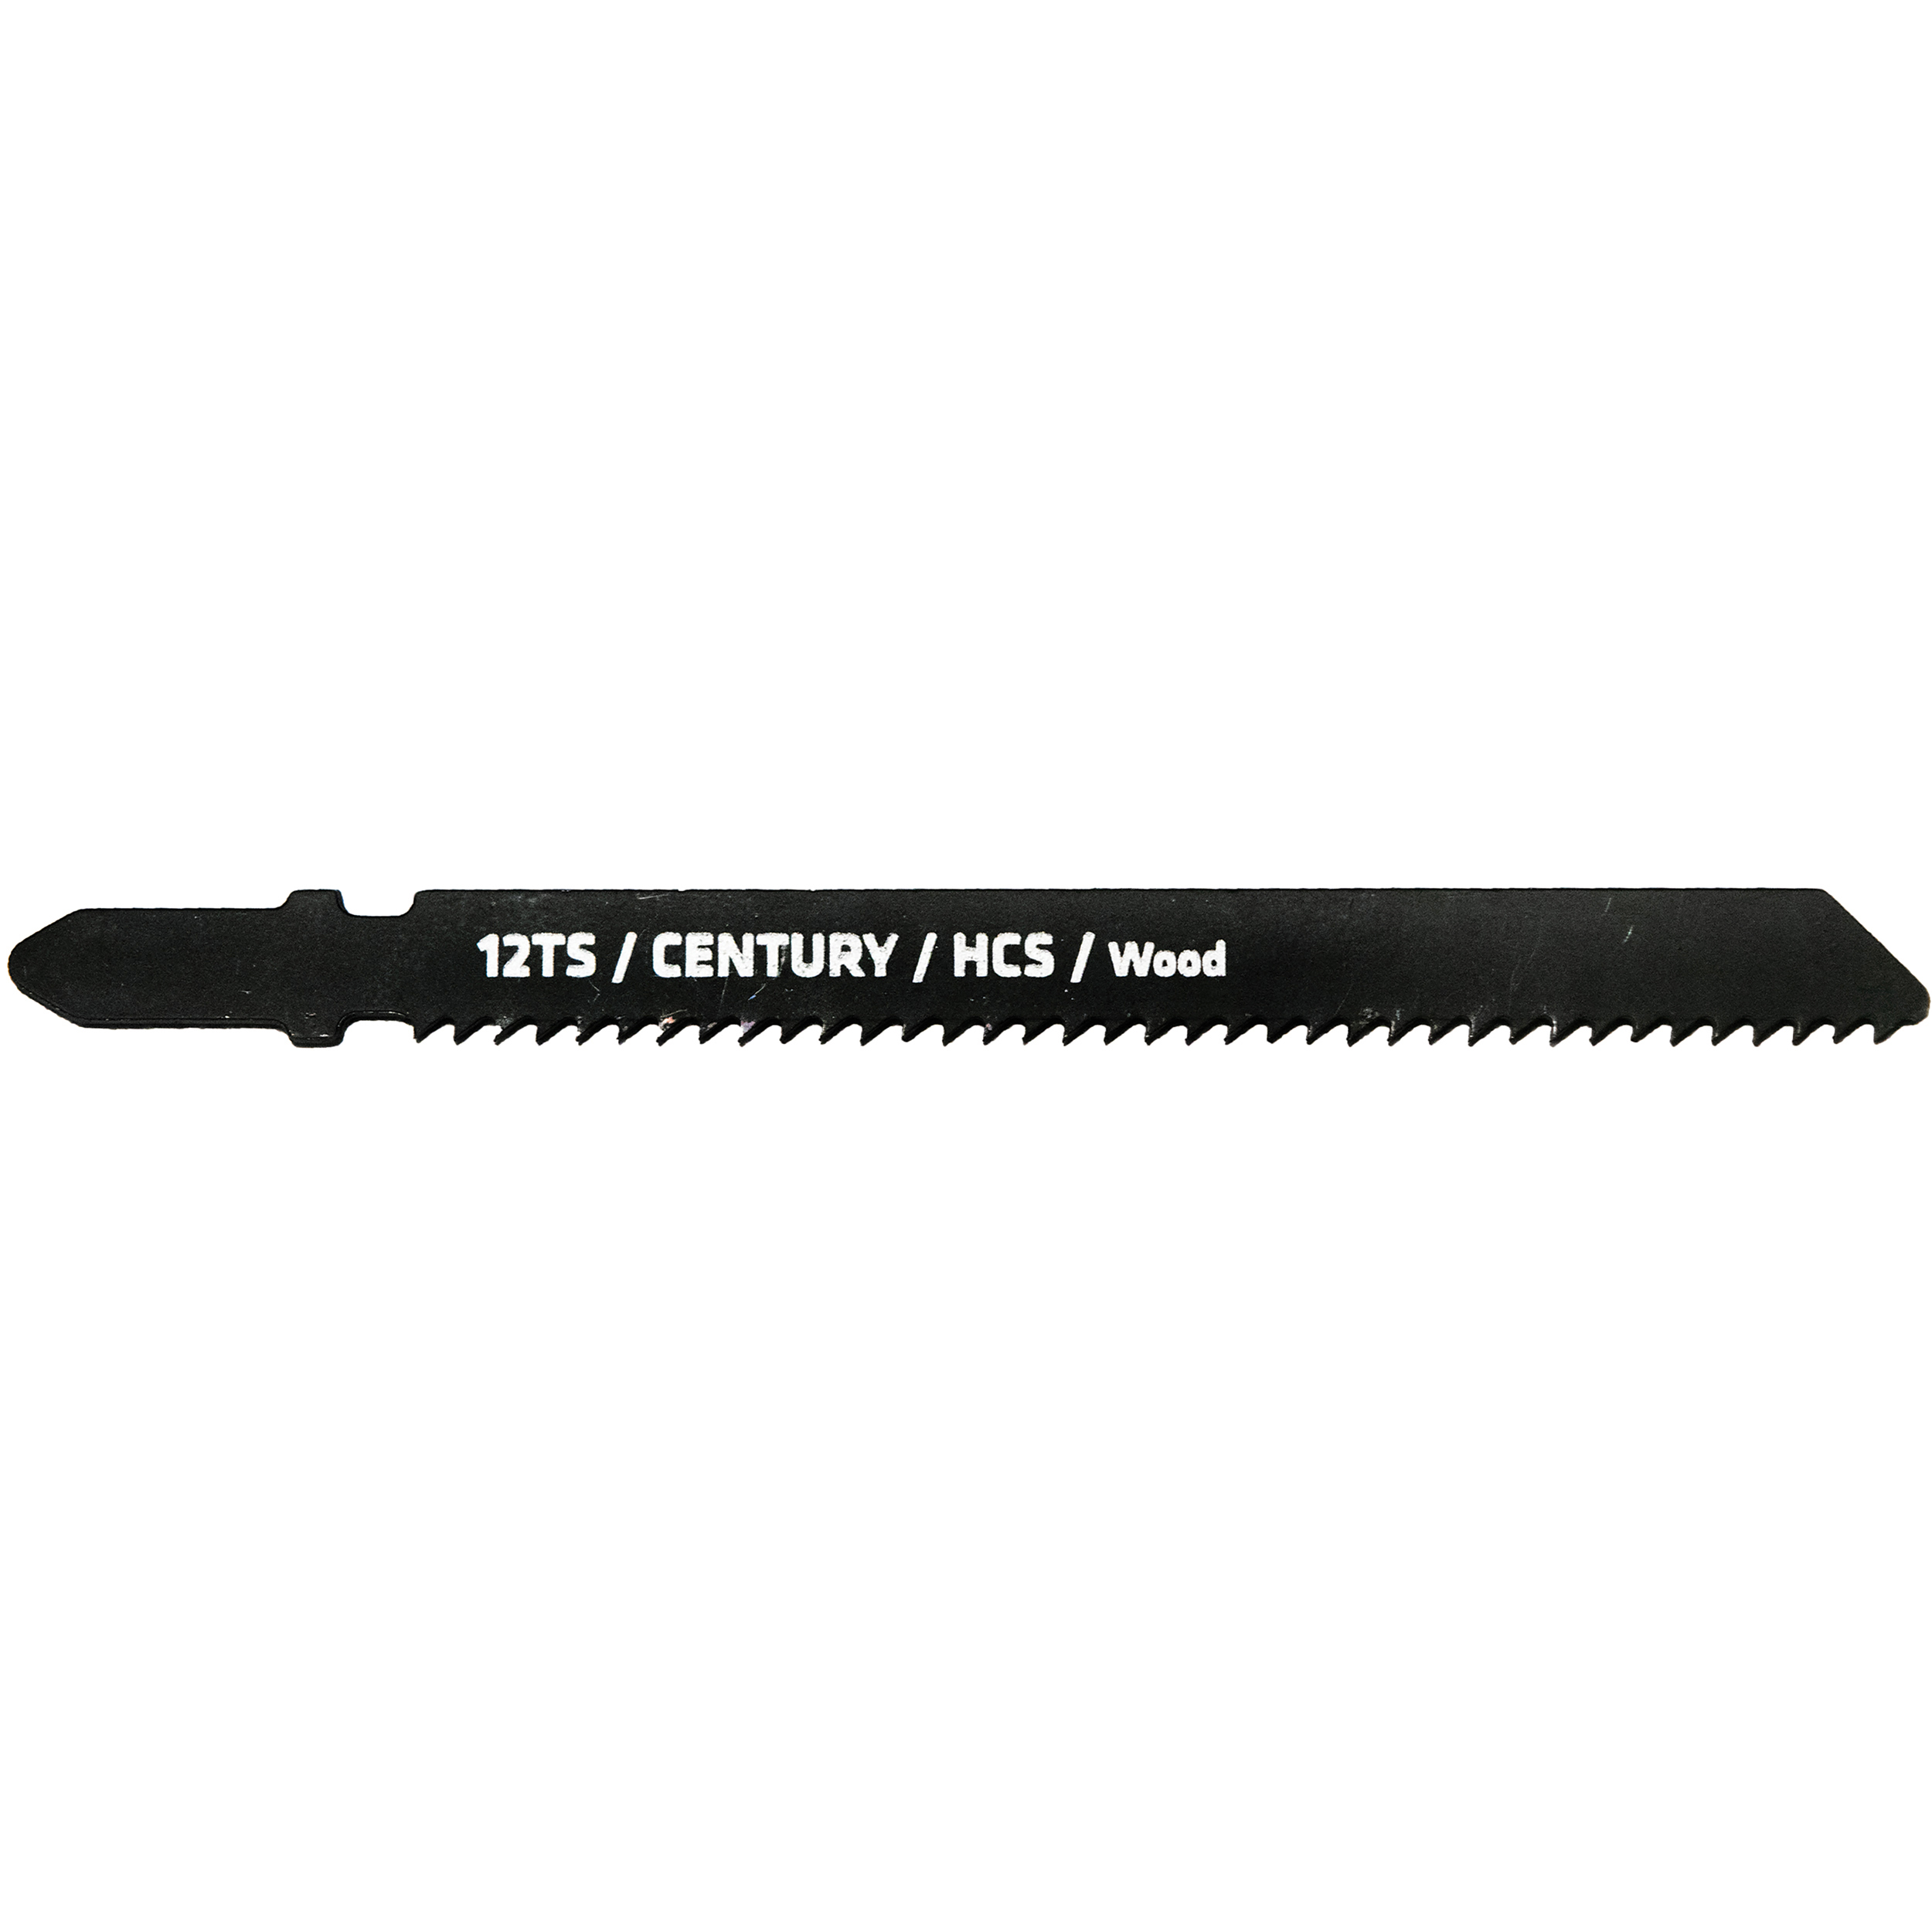 12TS Tang Shank HCS Jig-Saw Blade